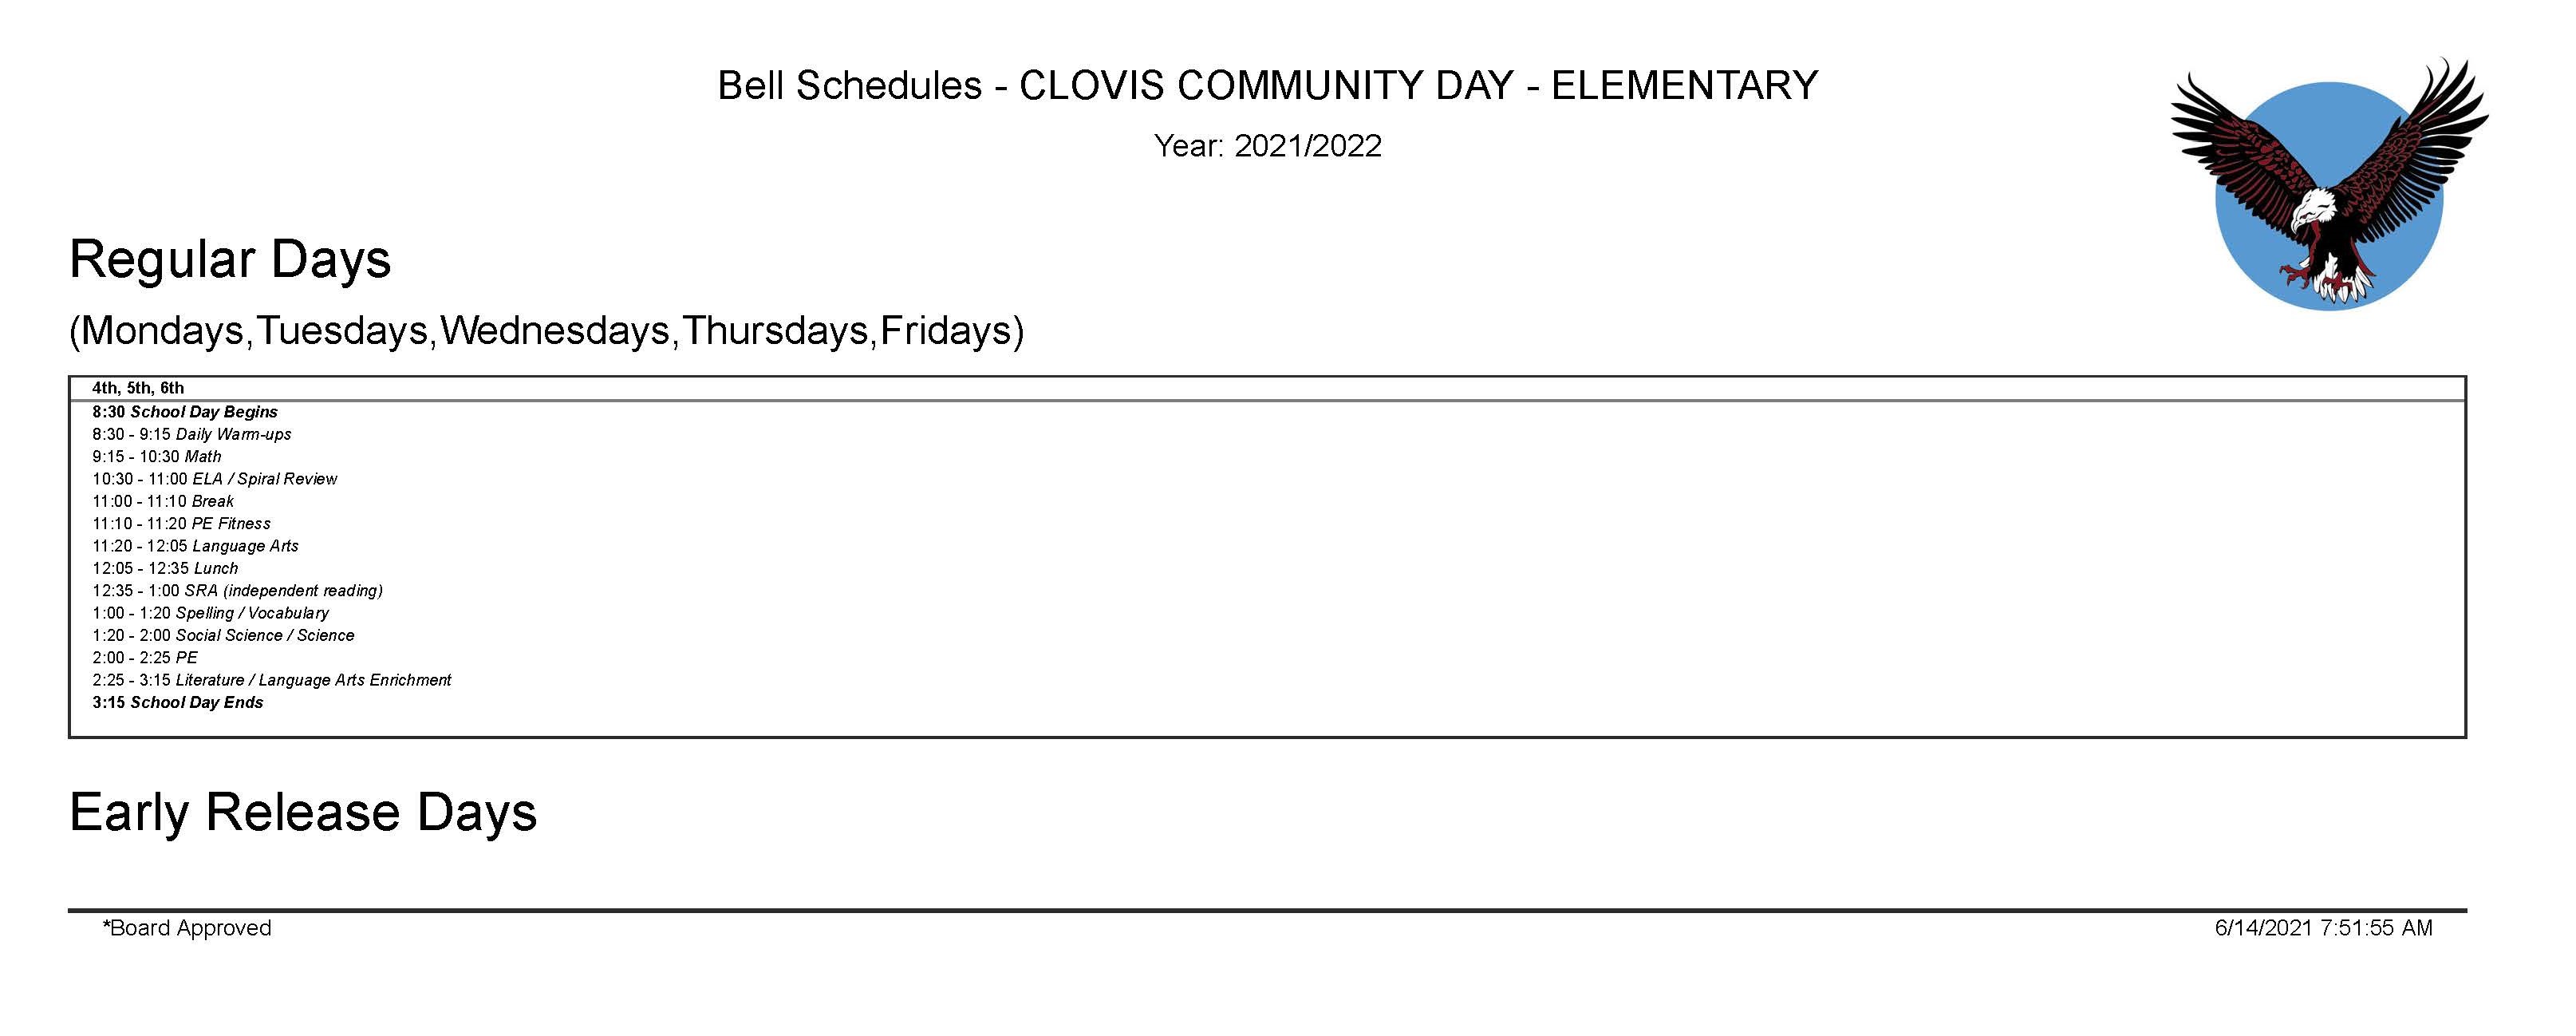 CCDS Elementary Bell Schedule - full copy downloadable below